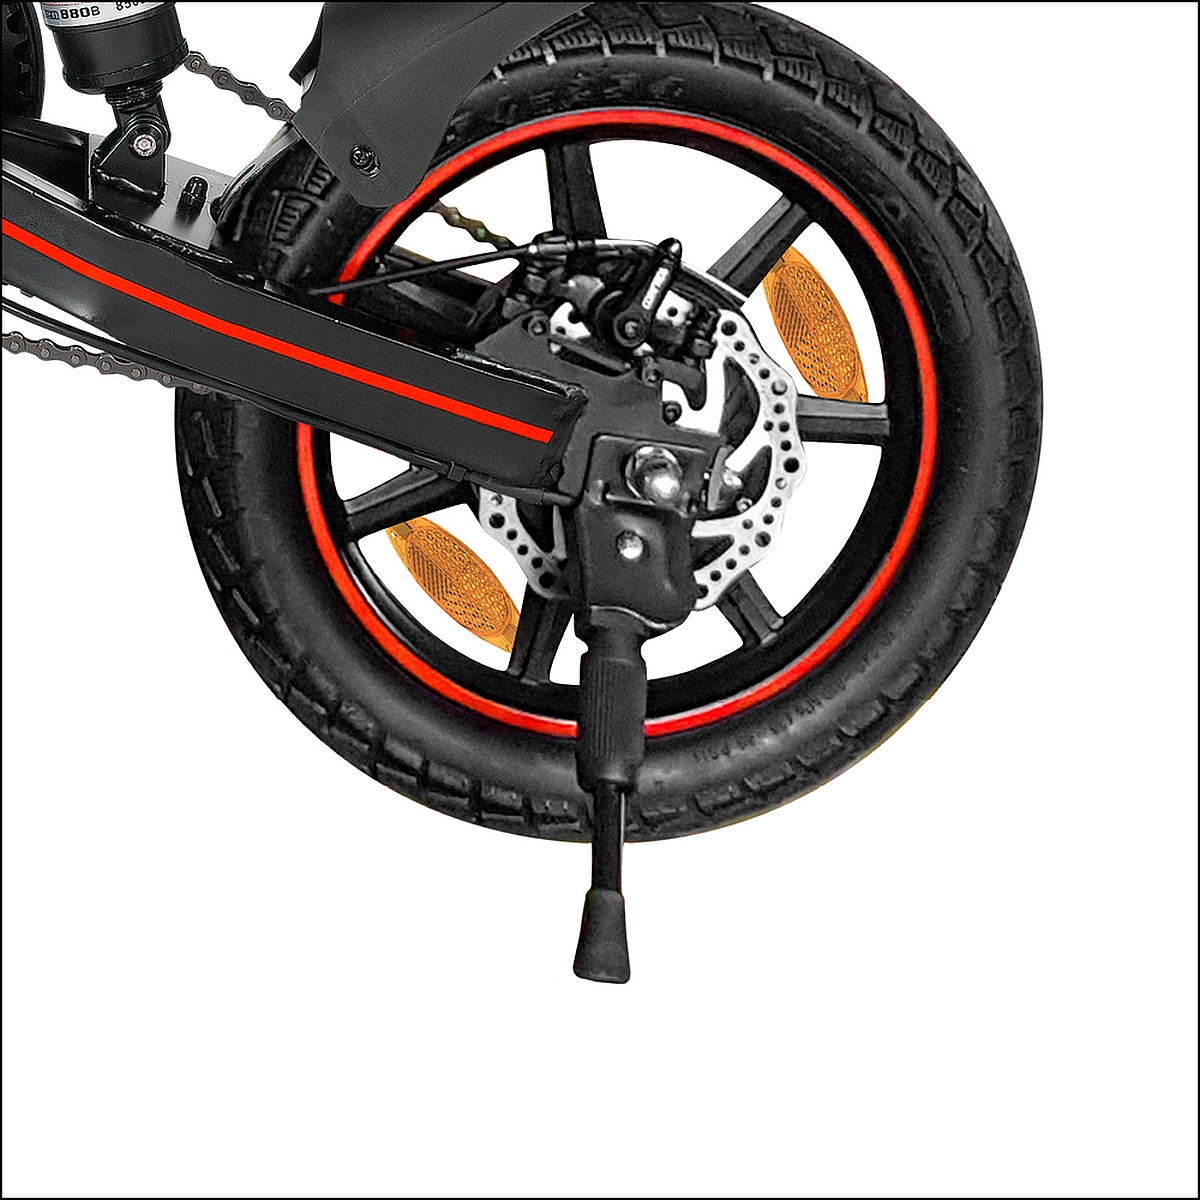 FORCA Kompakt-/Faltrad Bike Unisex-Rad, (Laufradgröße: schwarz) 14 Zoll, City